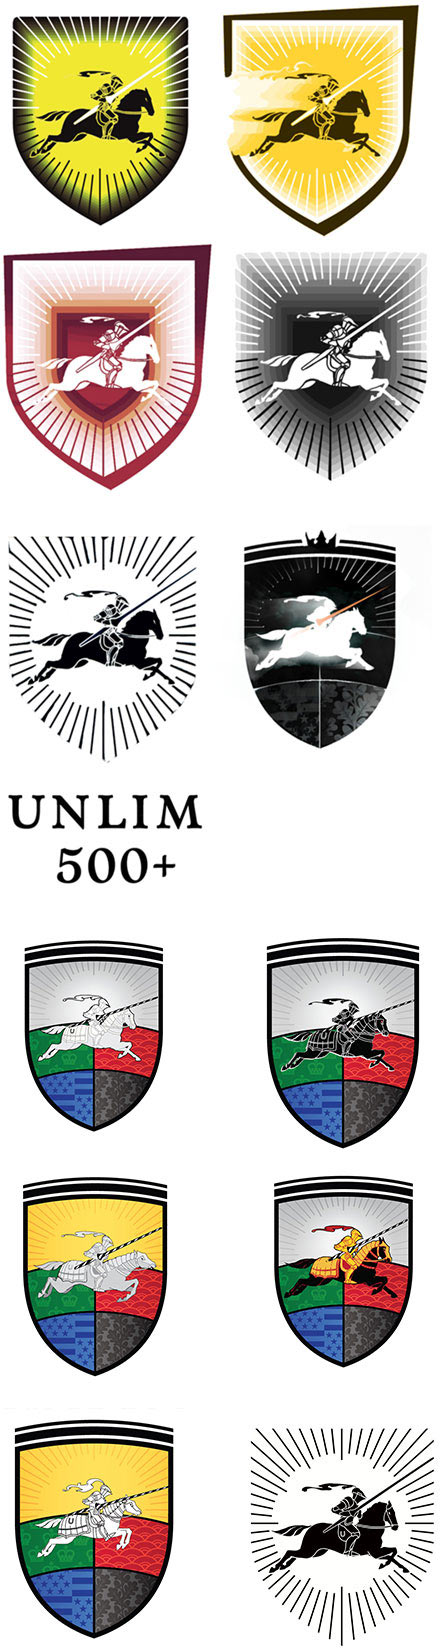 unlim500 logo process 25